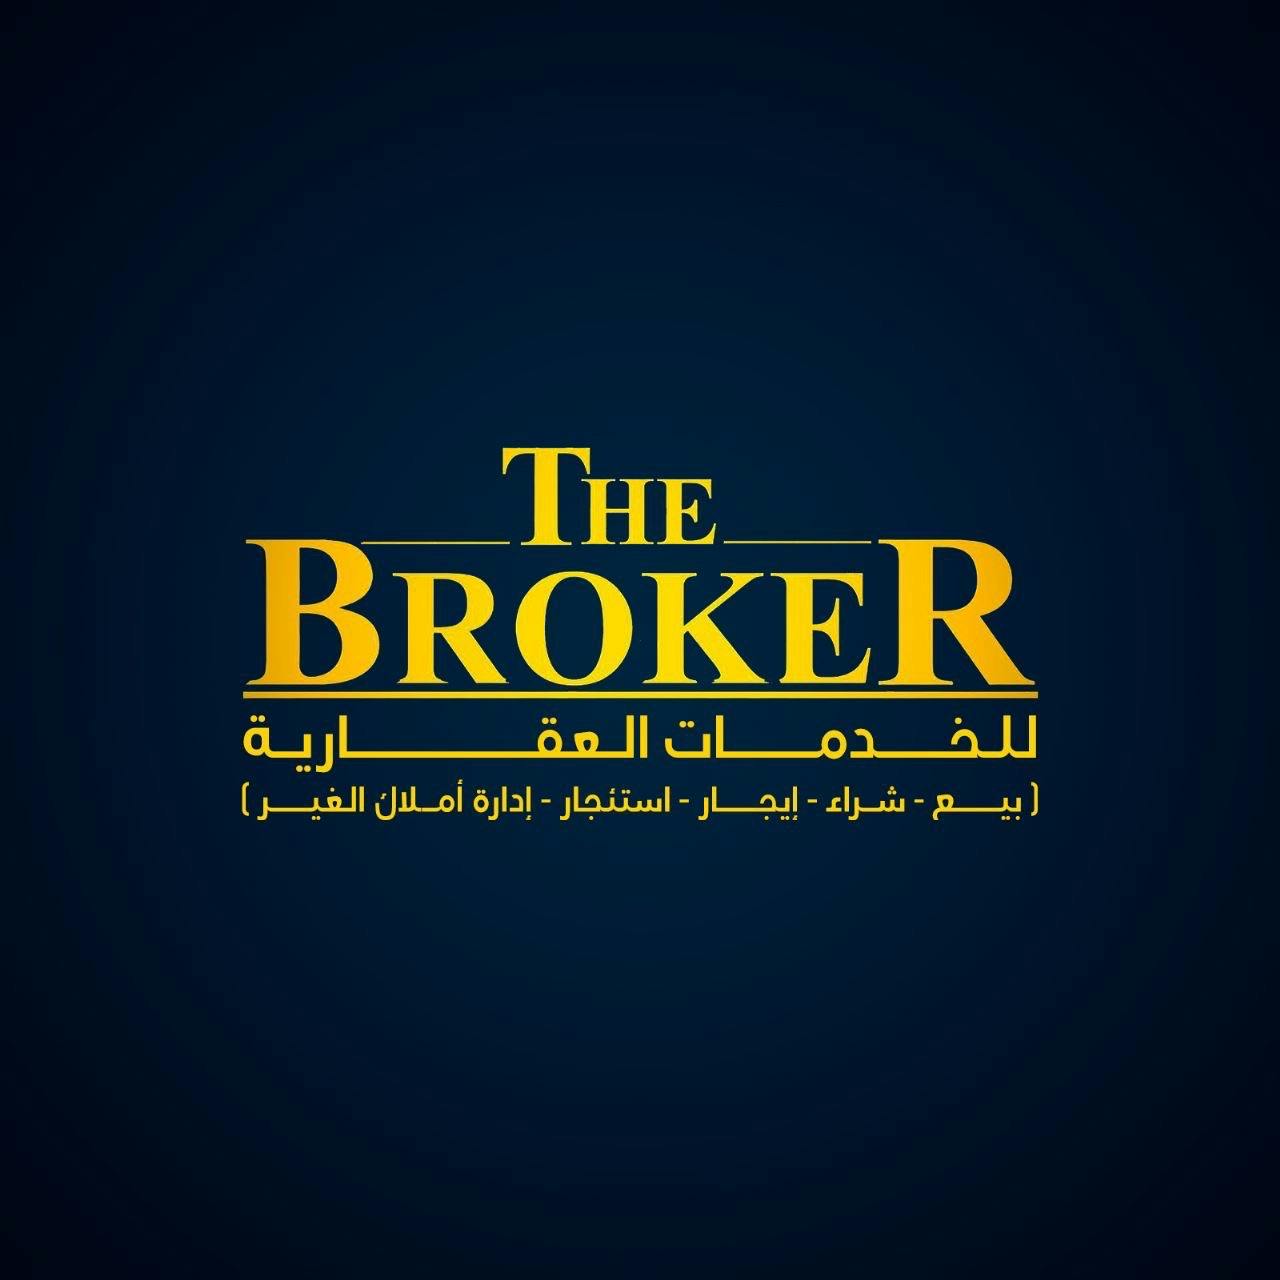 The Broker  مكتب عقاري مرخص مشارك في بوعقار